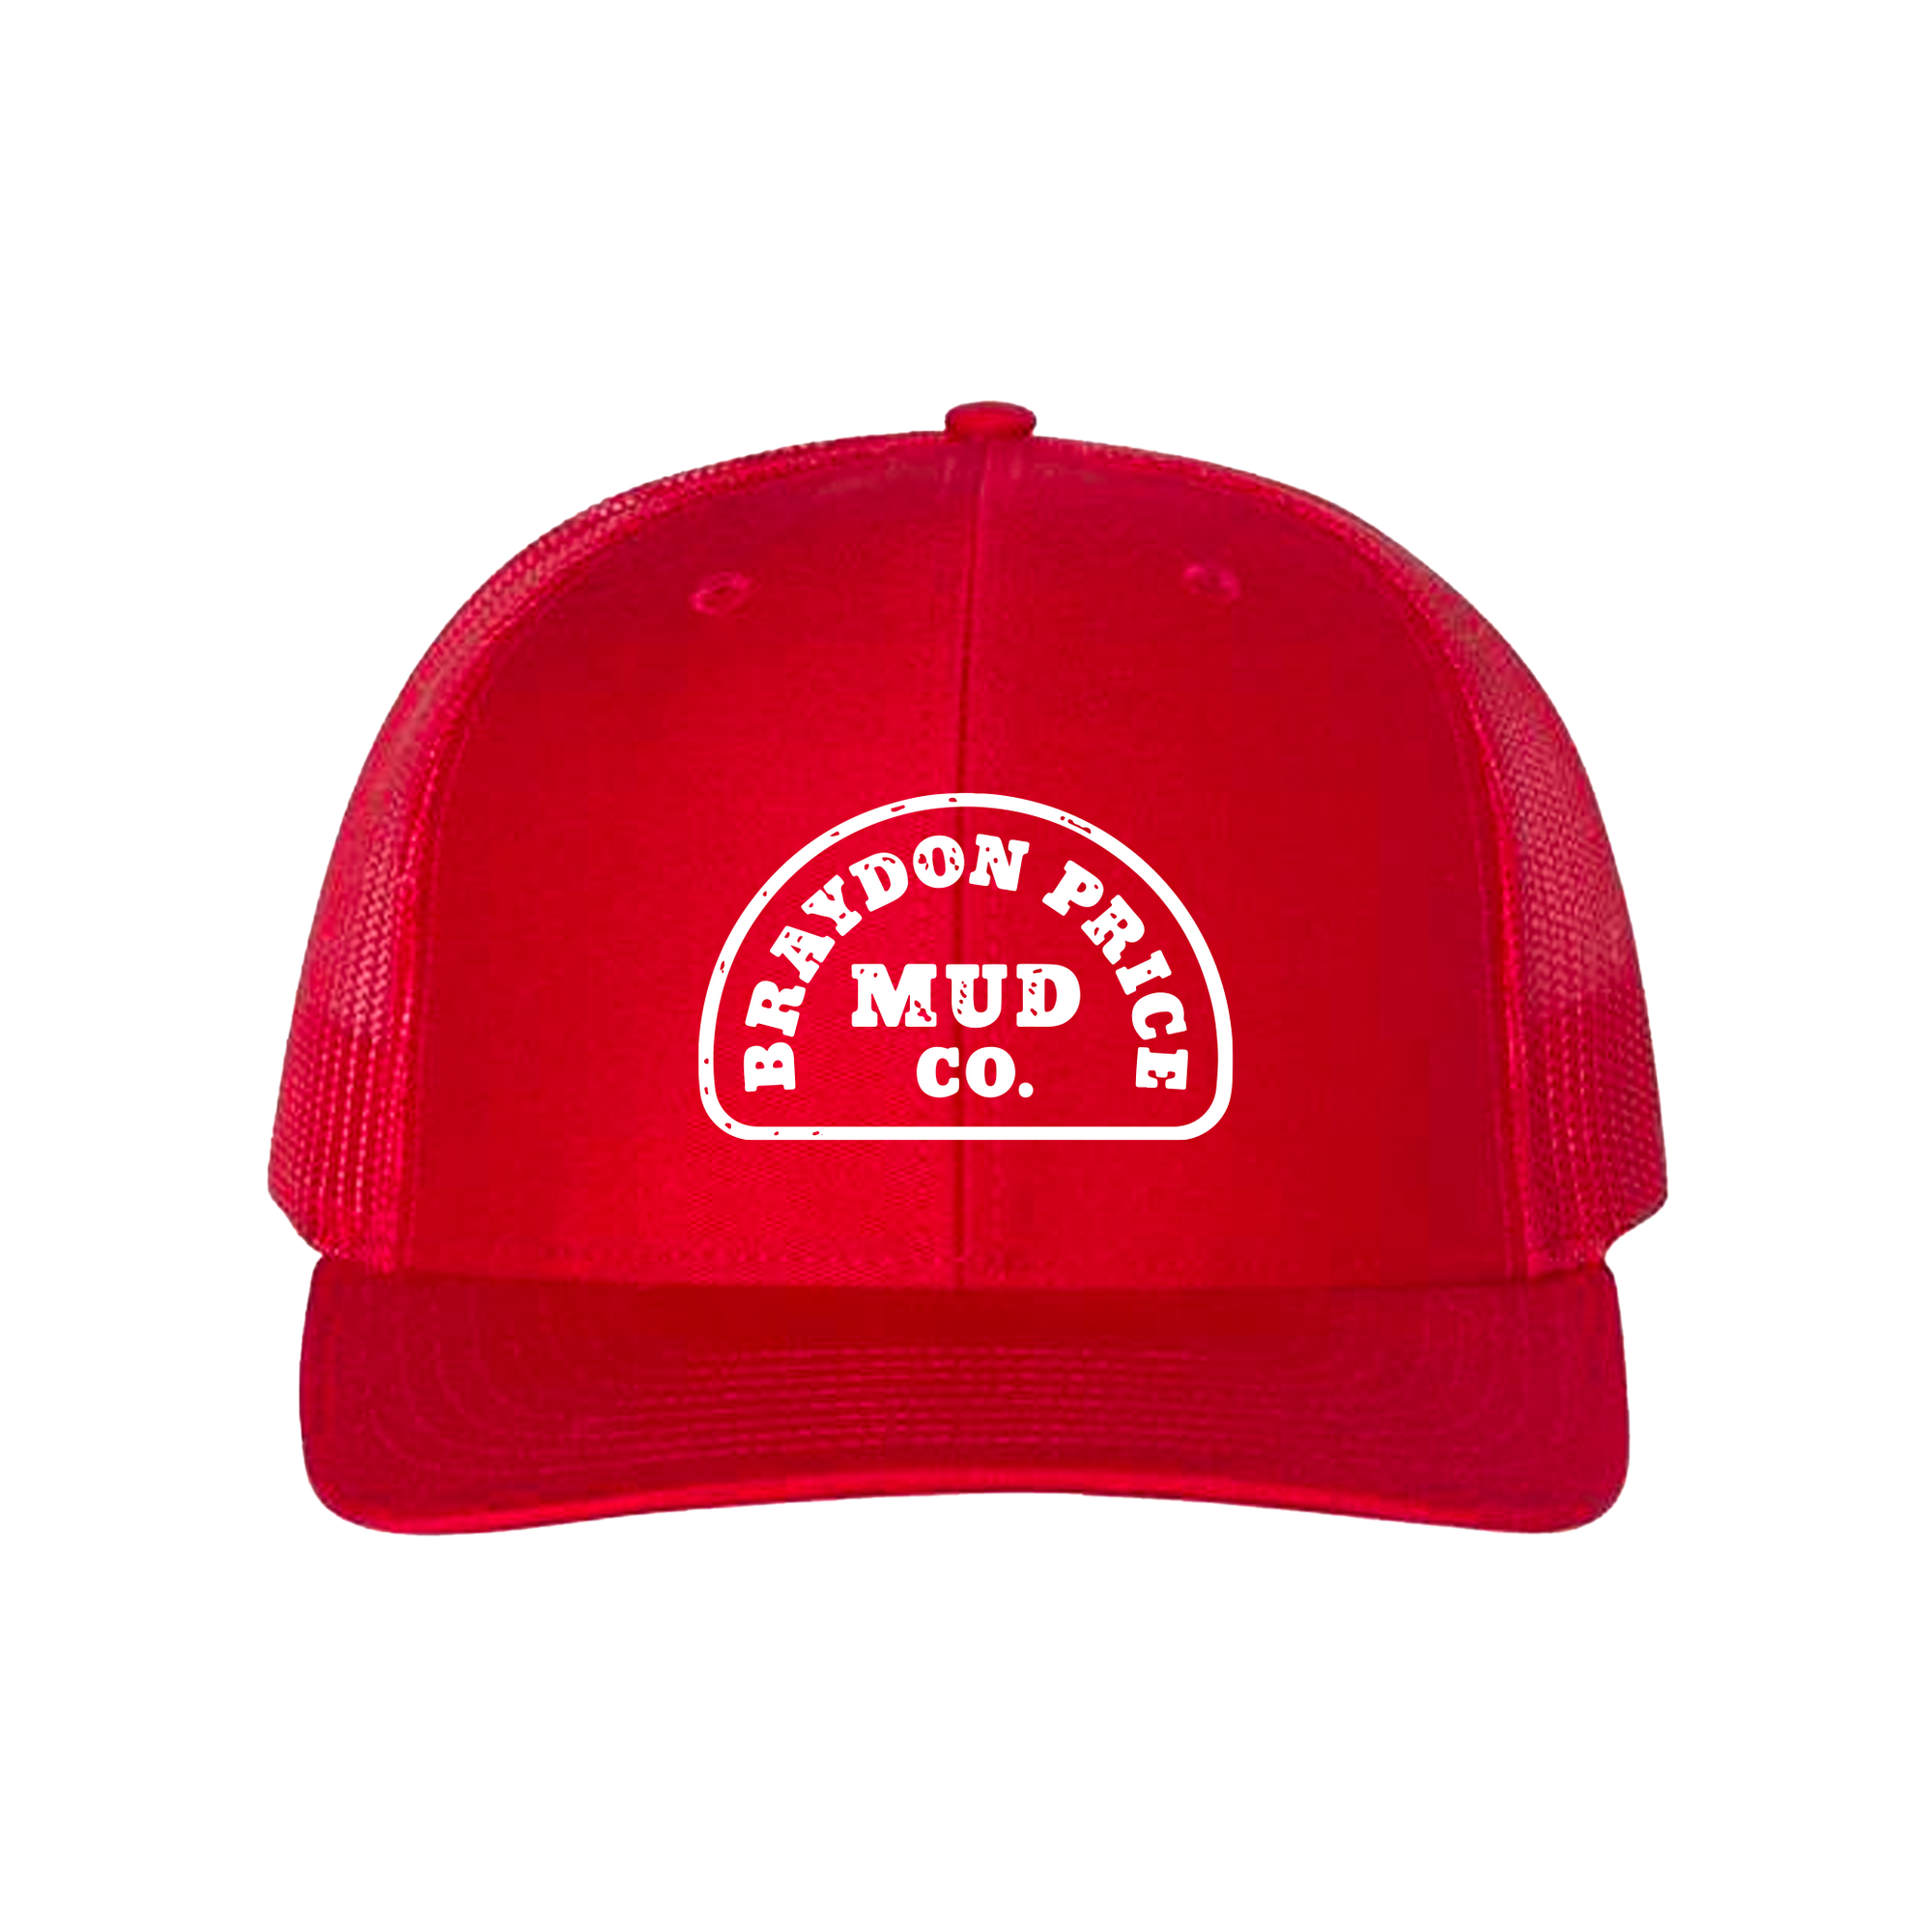 BP Mud Co Classic Mesh Trucker Cap